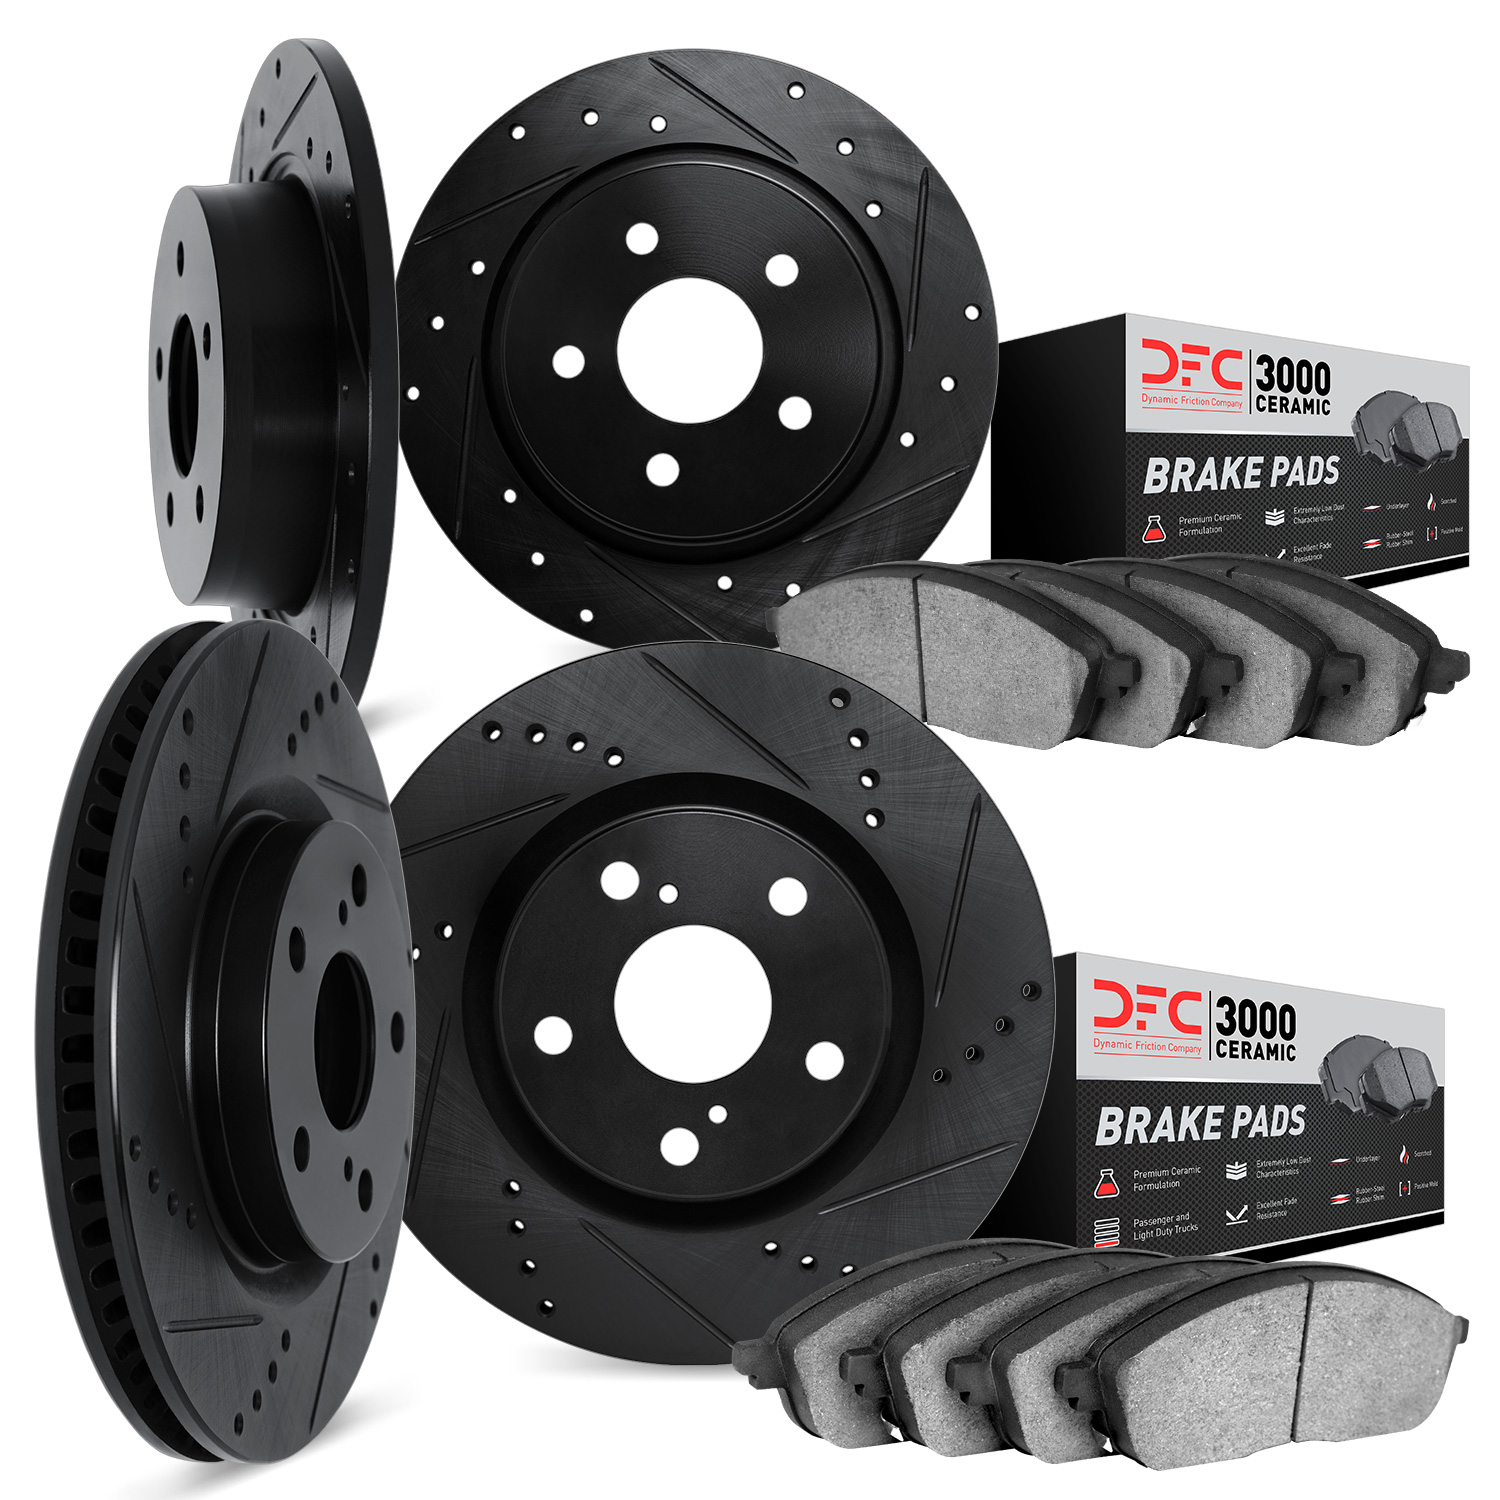 8304-54085 Drilled/Slotted Brake Rotors with 3000-Series Ceramic Brake Pads Kit [Black], 2011-2015 Ford/Lincoln/Mercury/Mazda, P